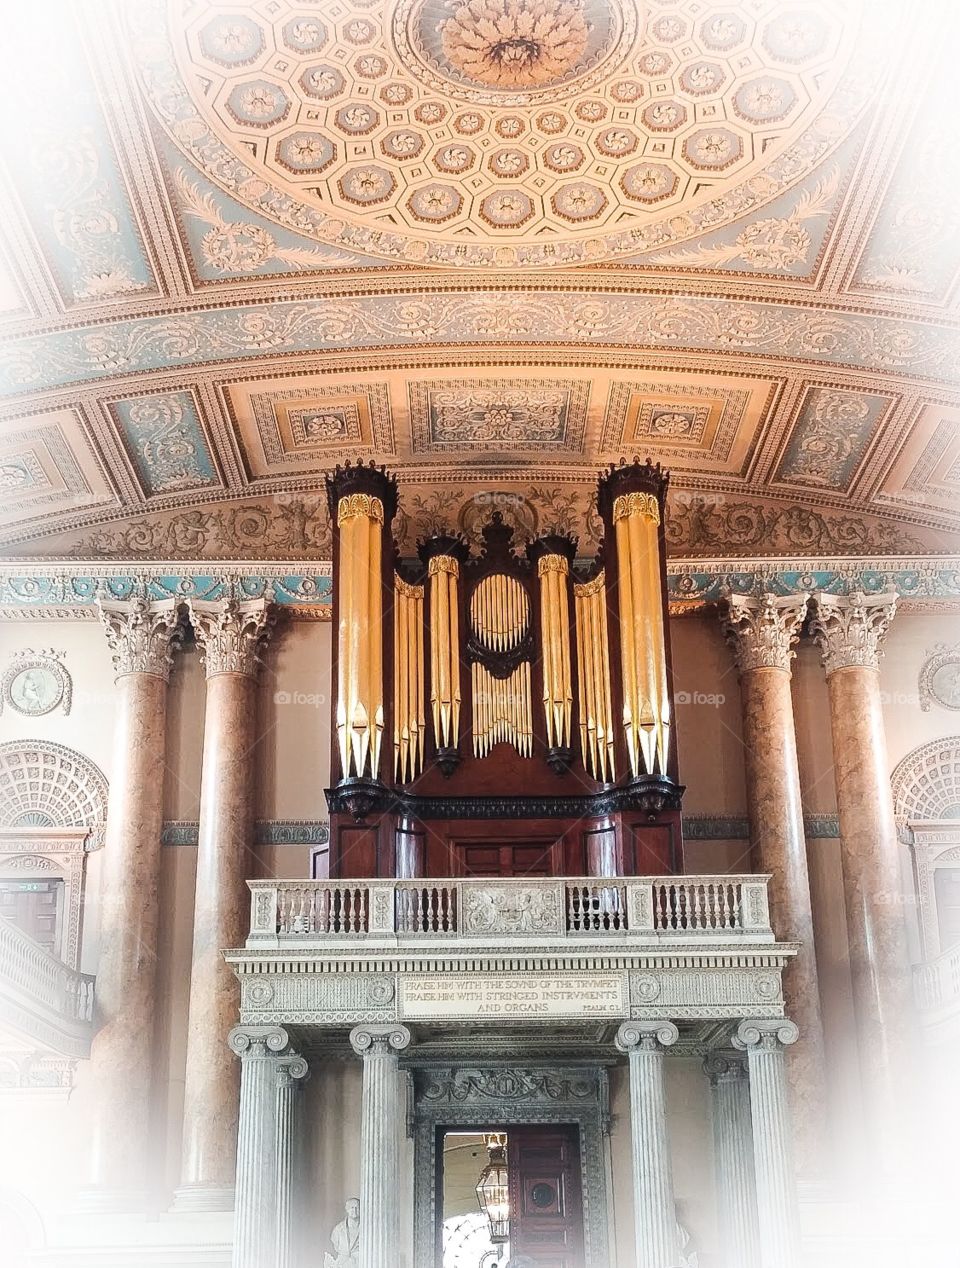 Beautiful organ off the Great Hall in Greenwich, London England